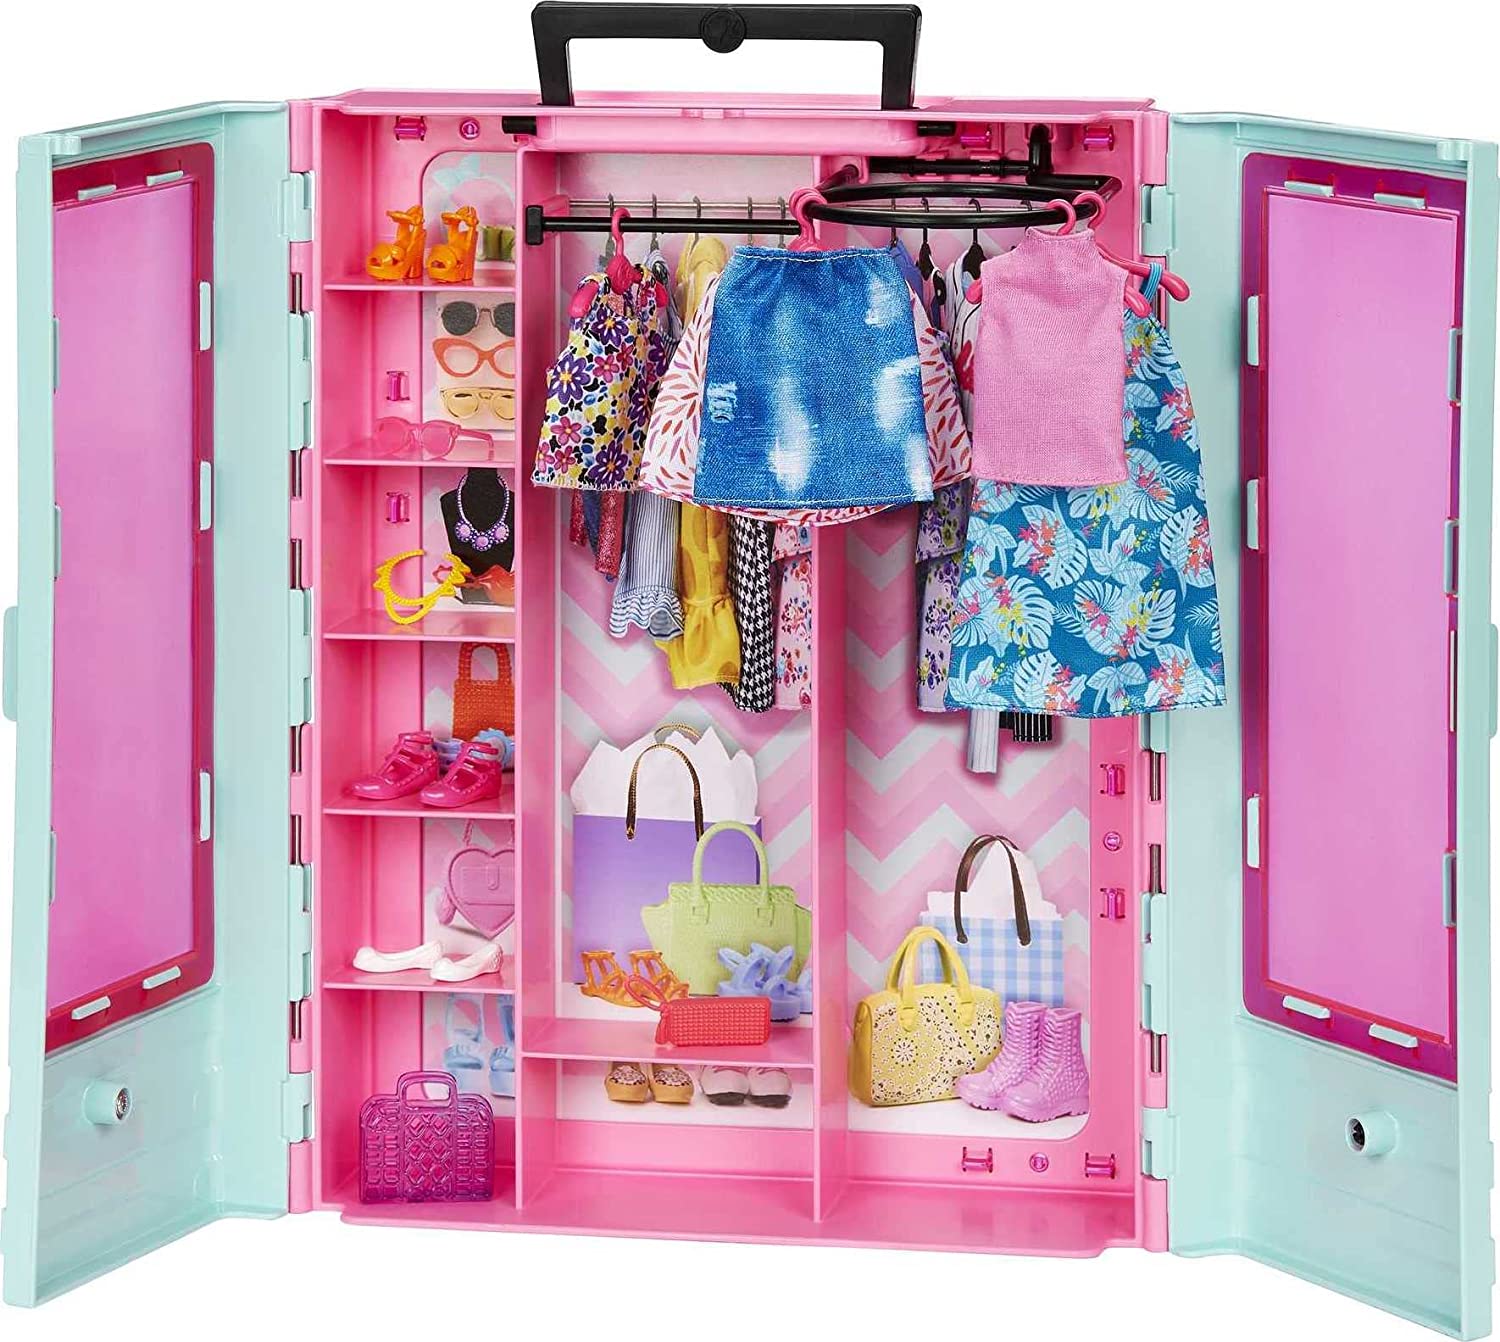 Barbie Looks #14 gets a wardrobe upgrade : r/Barbie